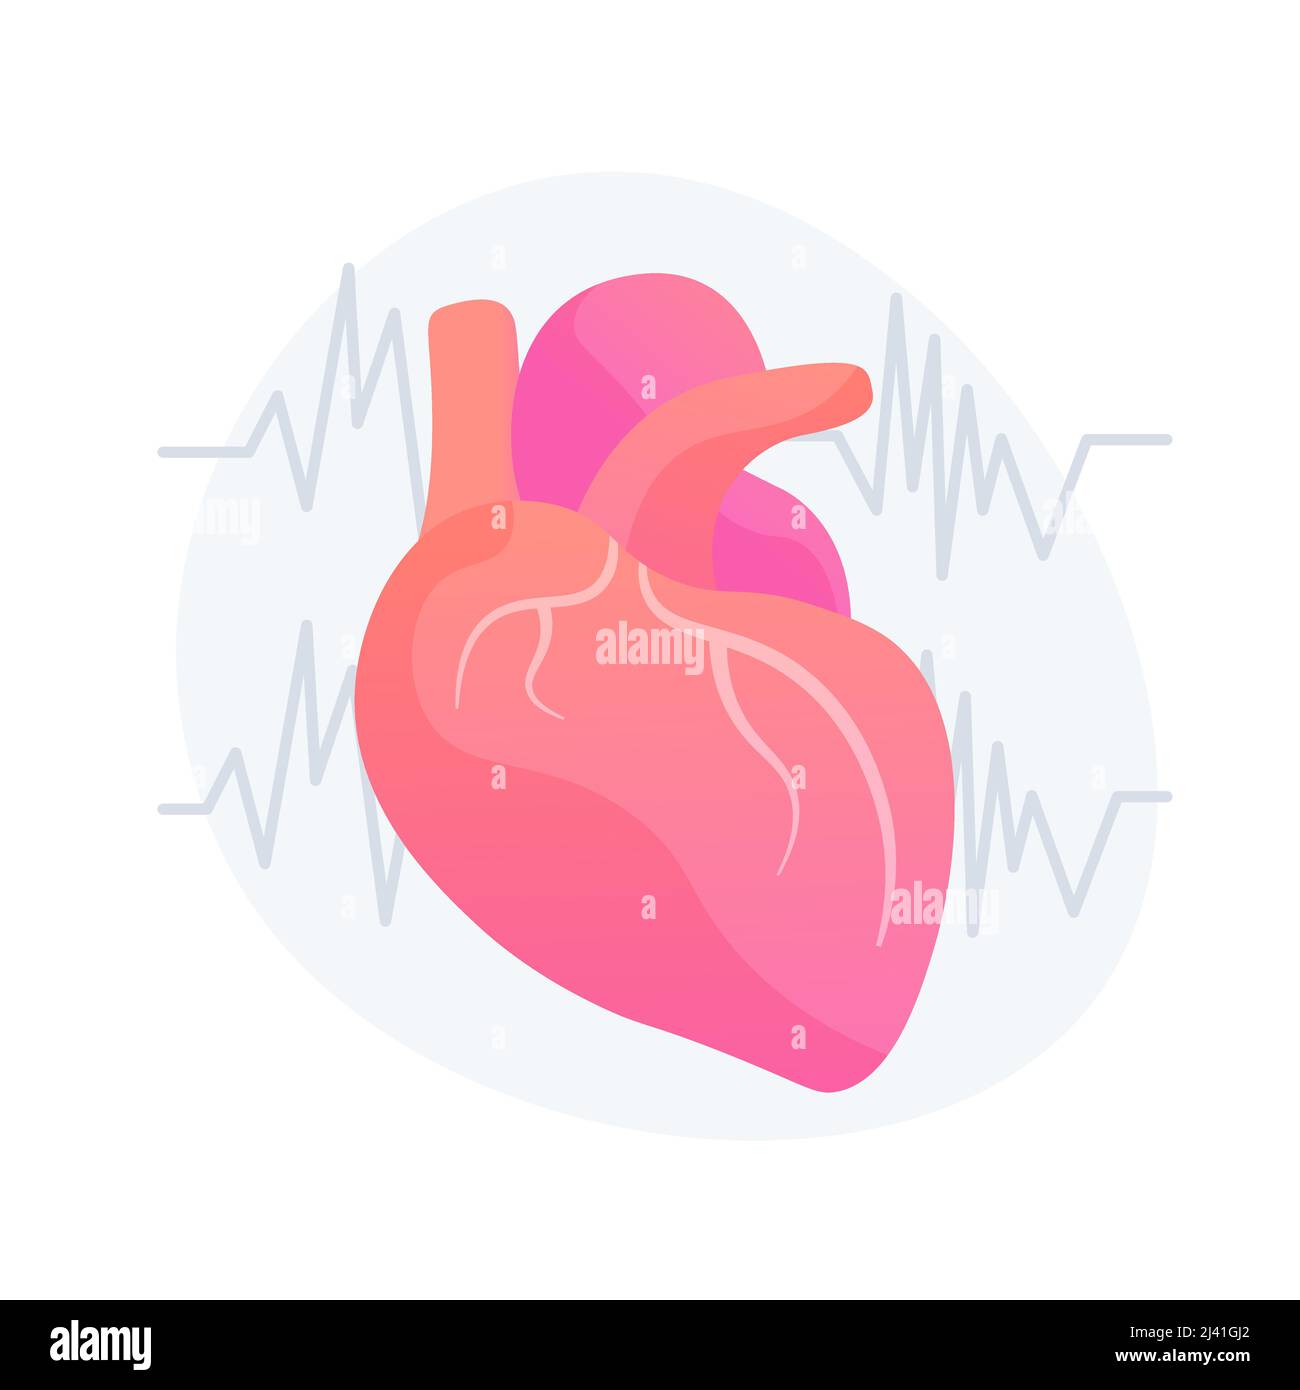 Cardiology clinic, hospital department. Healthy heart, cardiovascular prevention, healthcare industry idea design element. Electrocardiogram, EKG. Vec Stock Vector